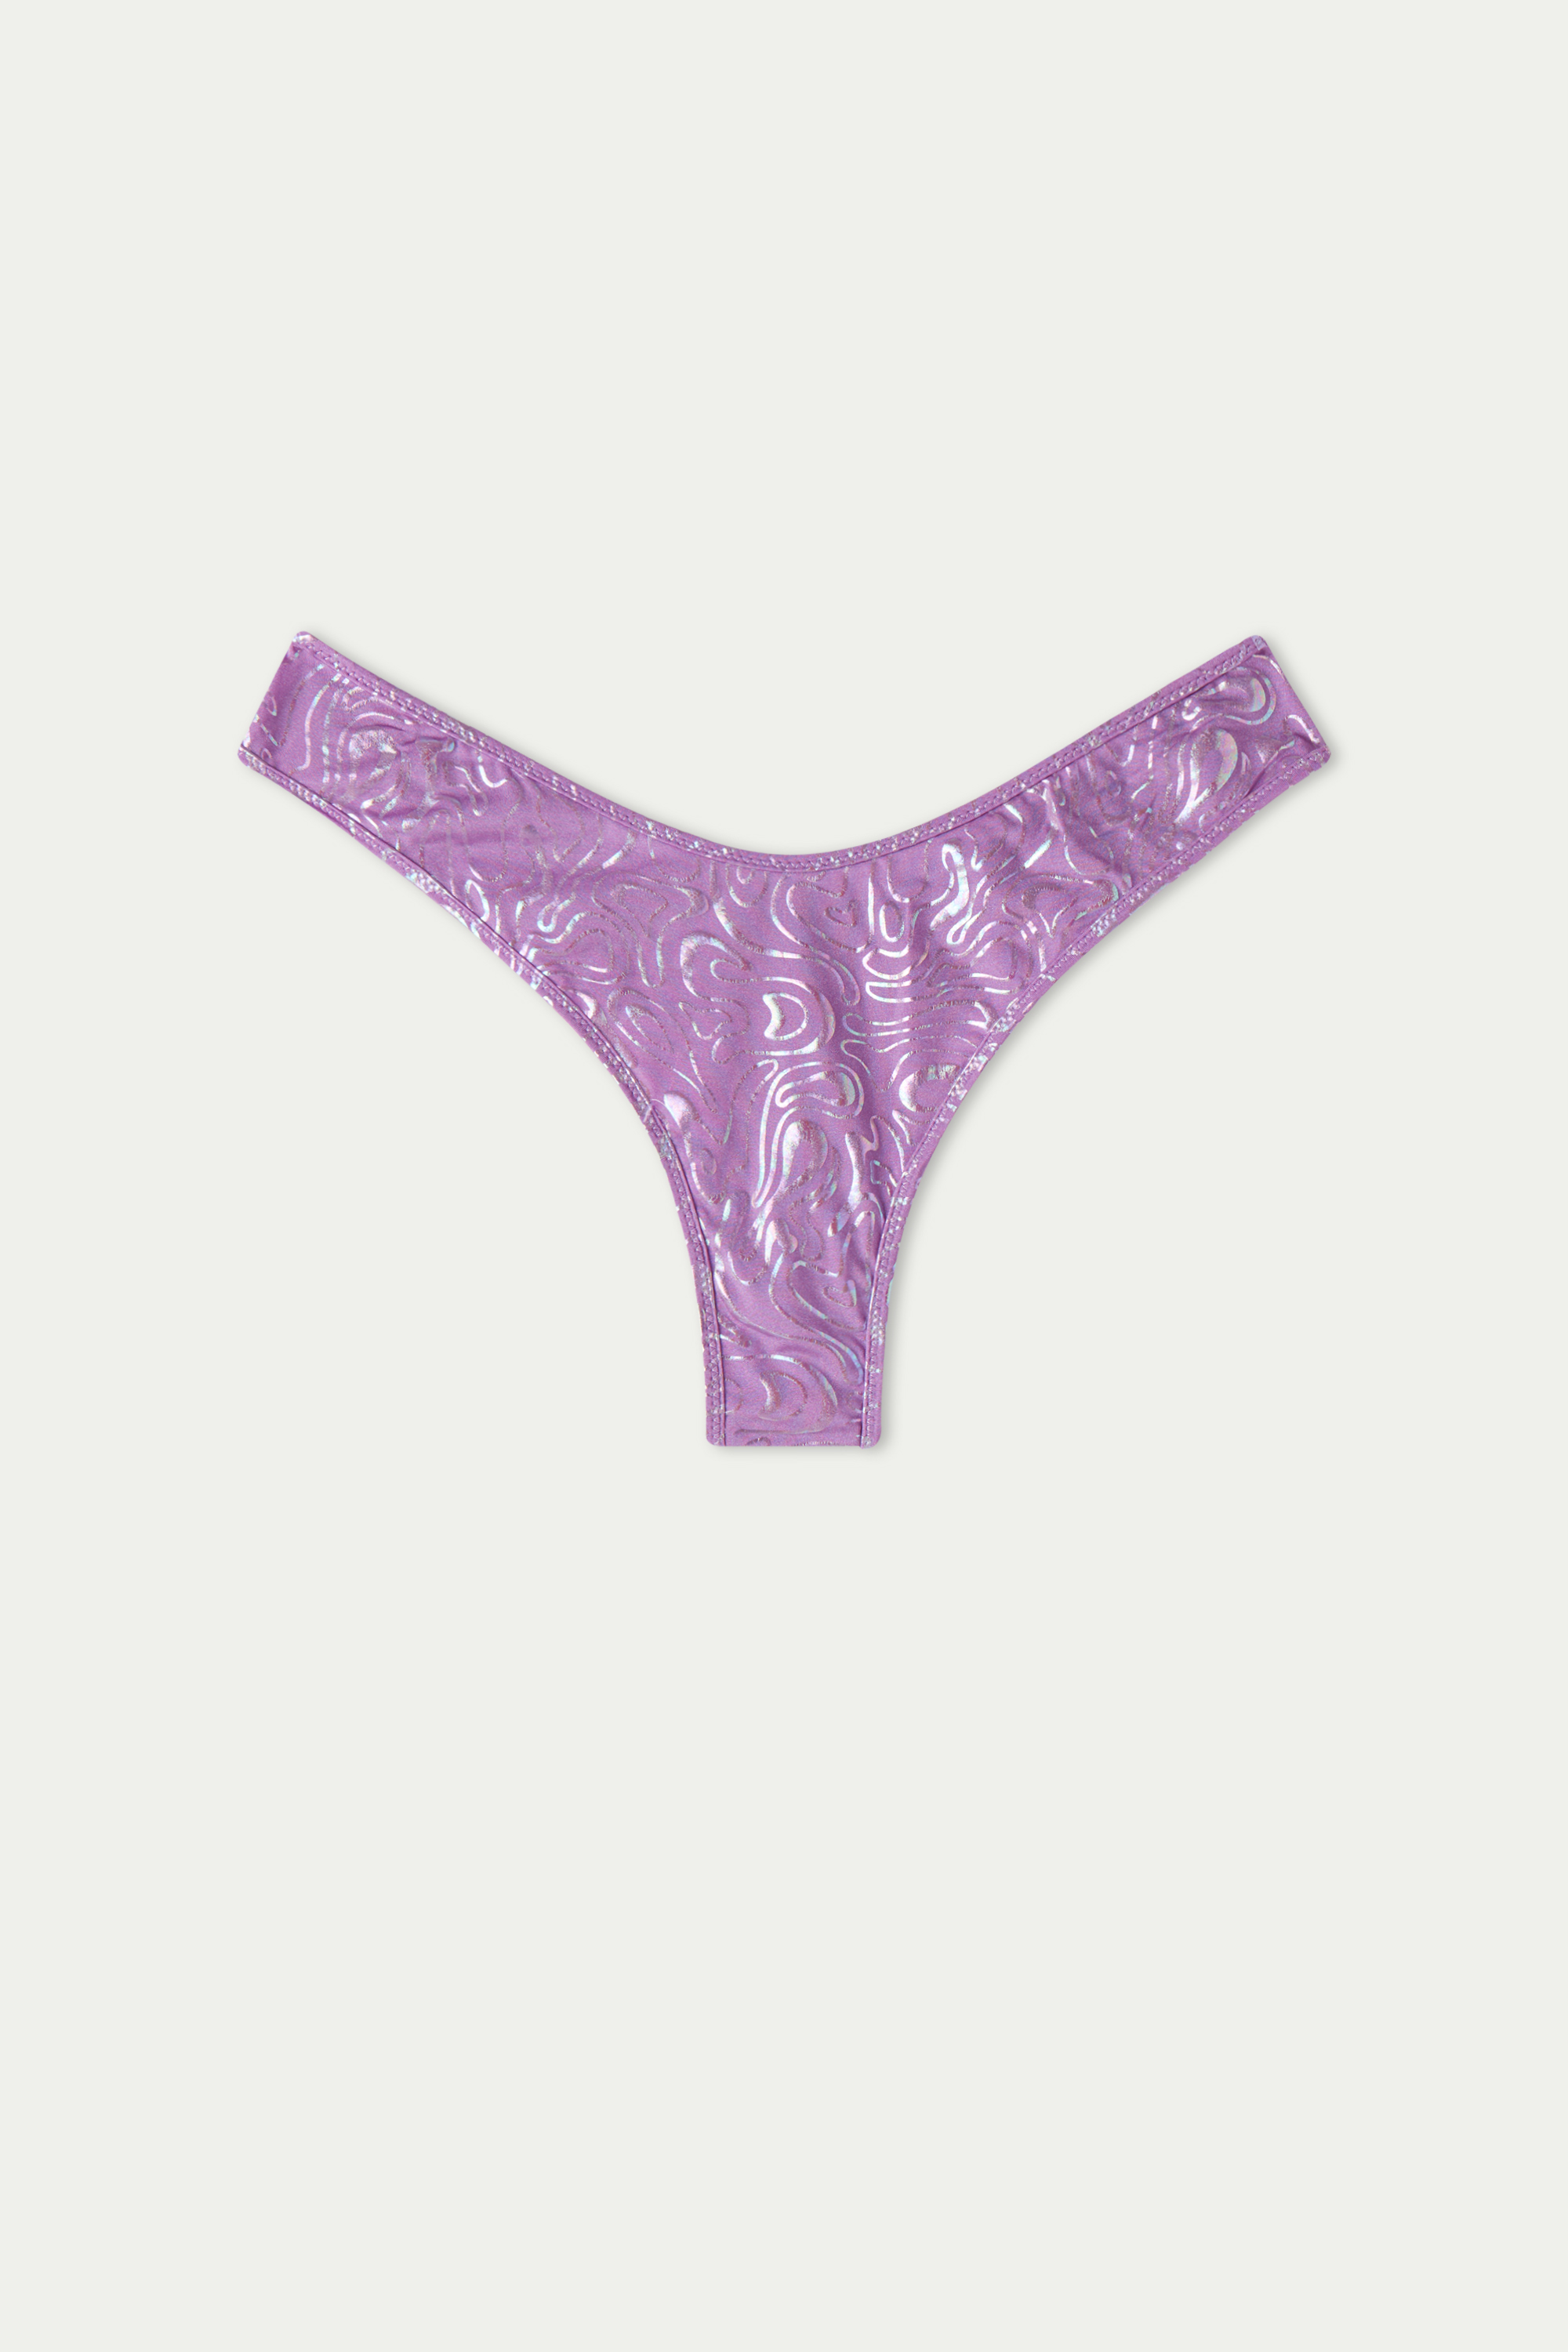 Fluid Violet High-Cut String Brazilian Panties